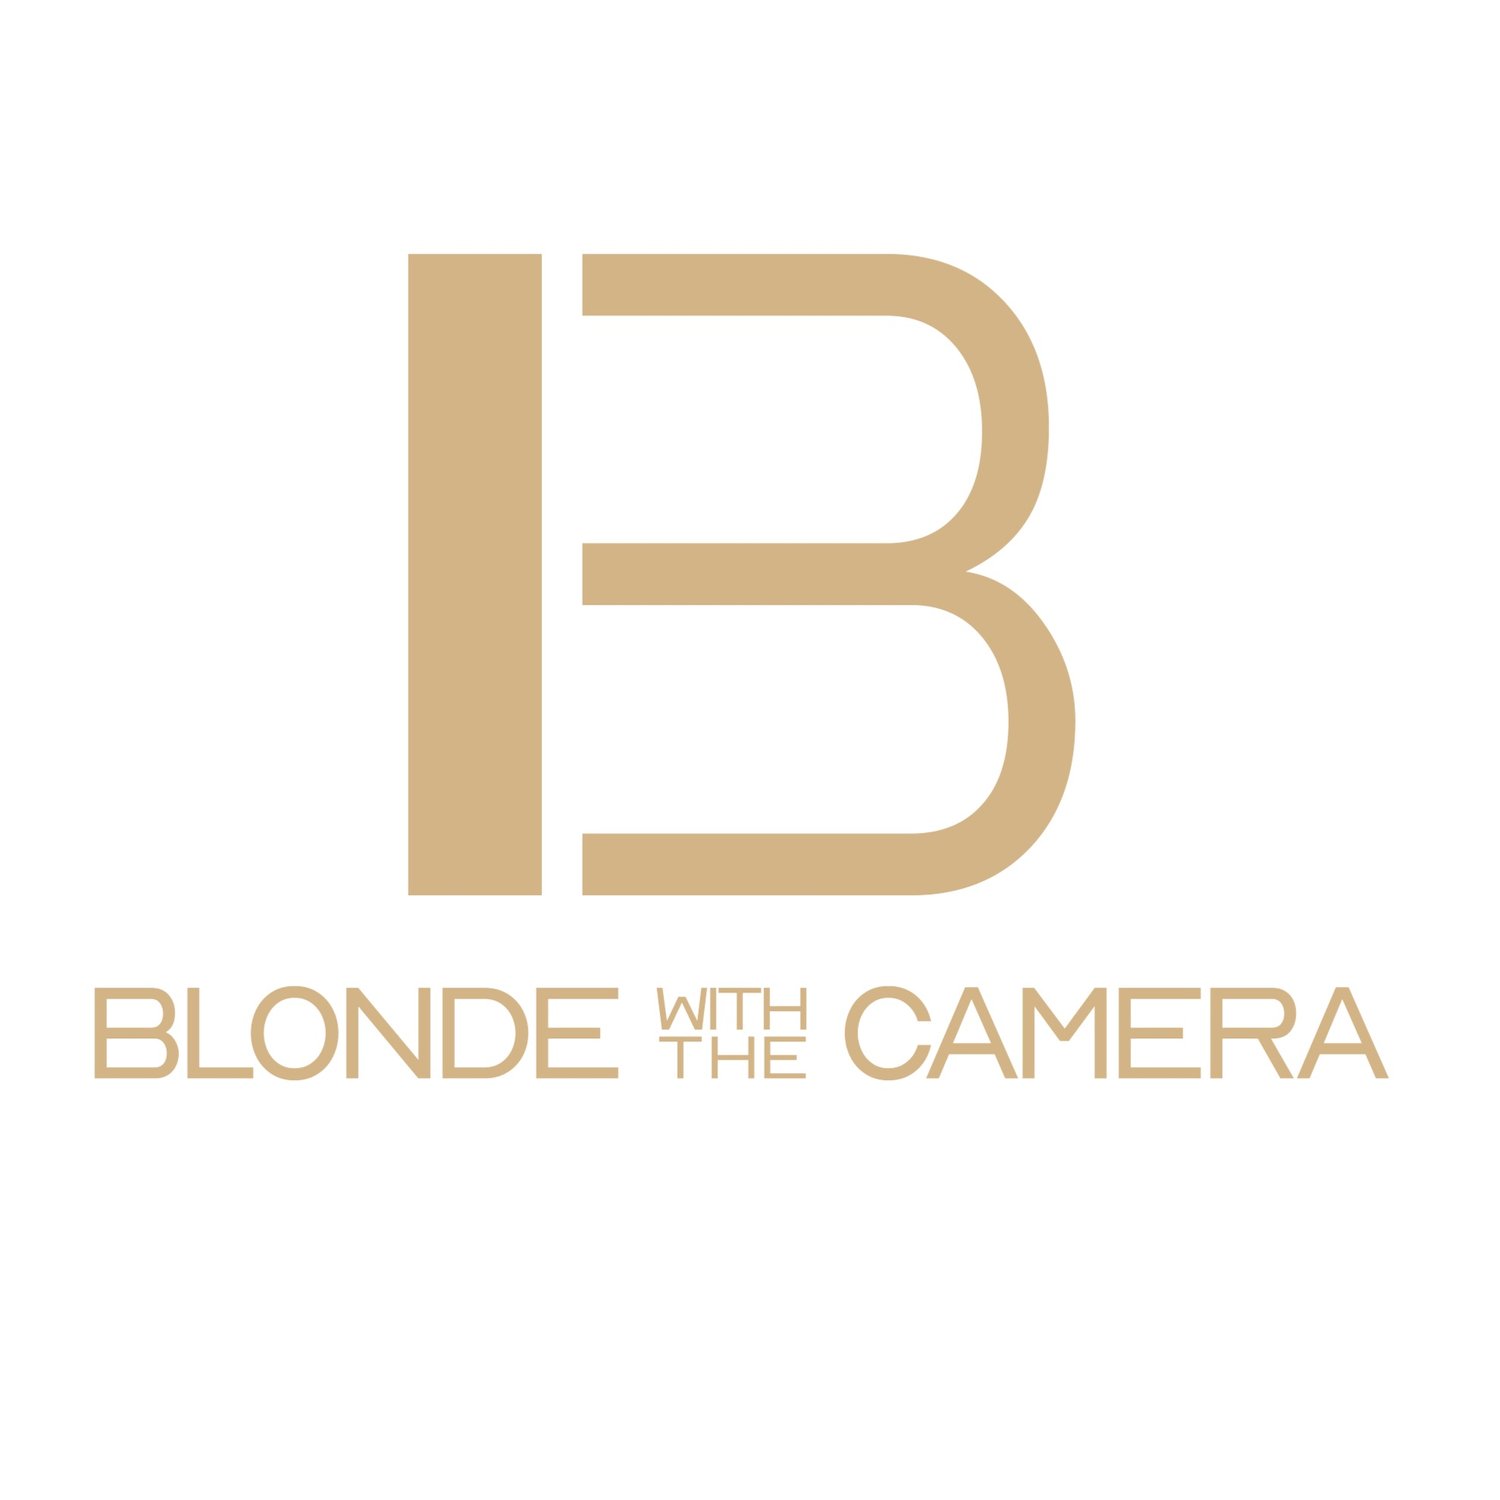 www.blondewiththecamera.com